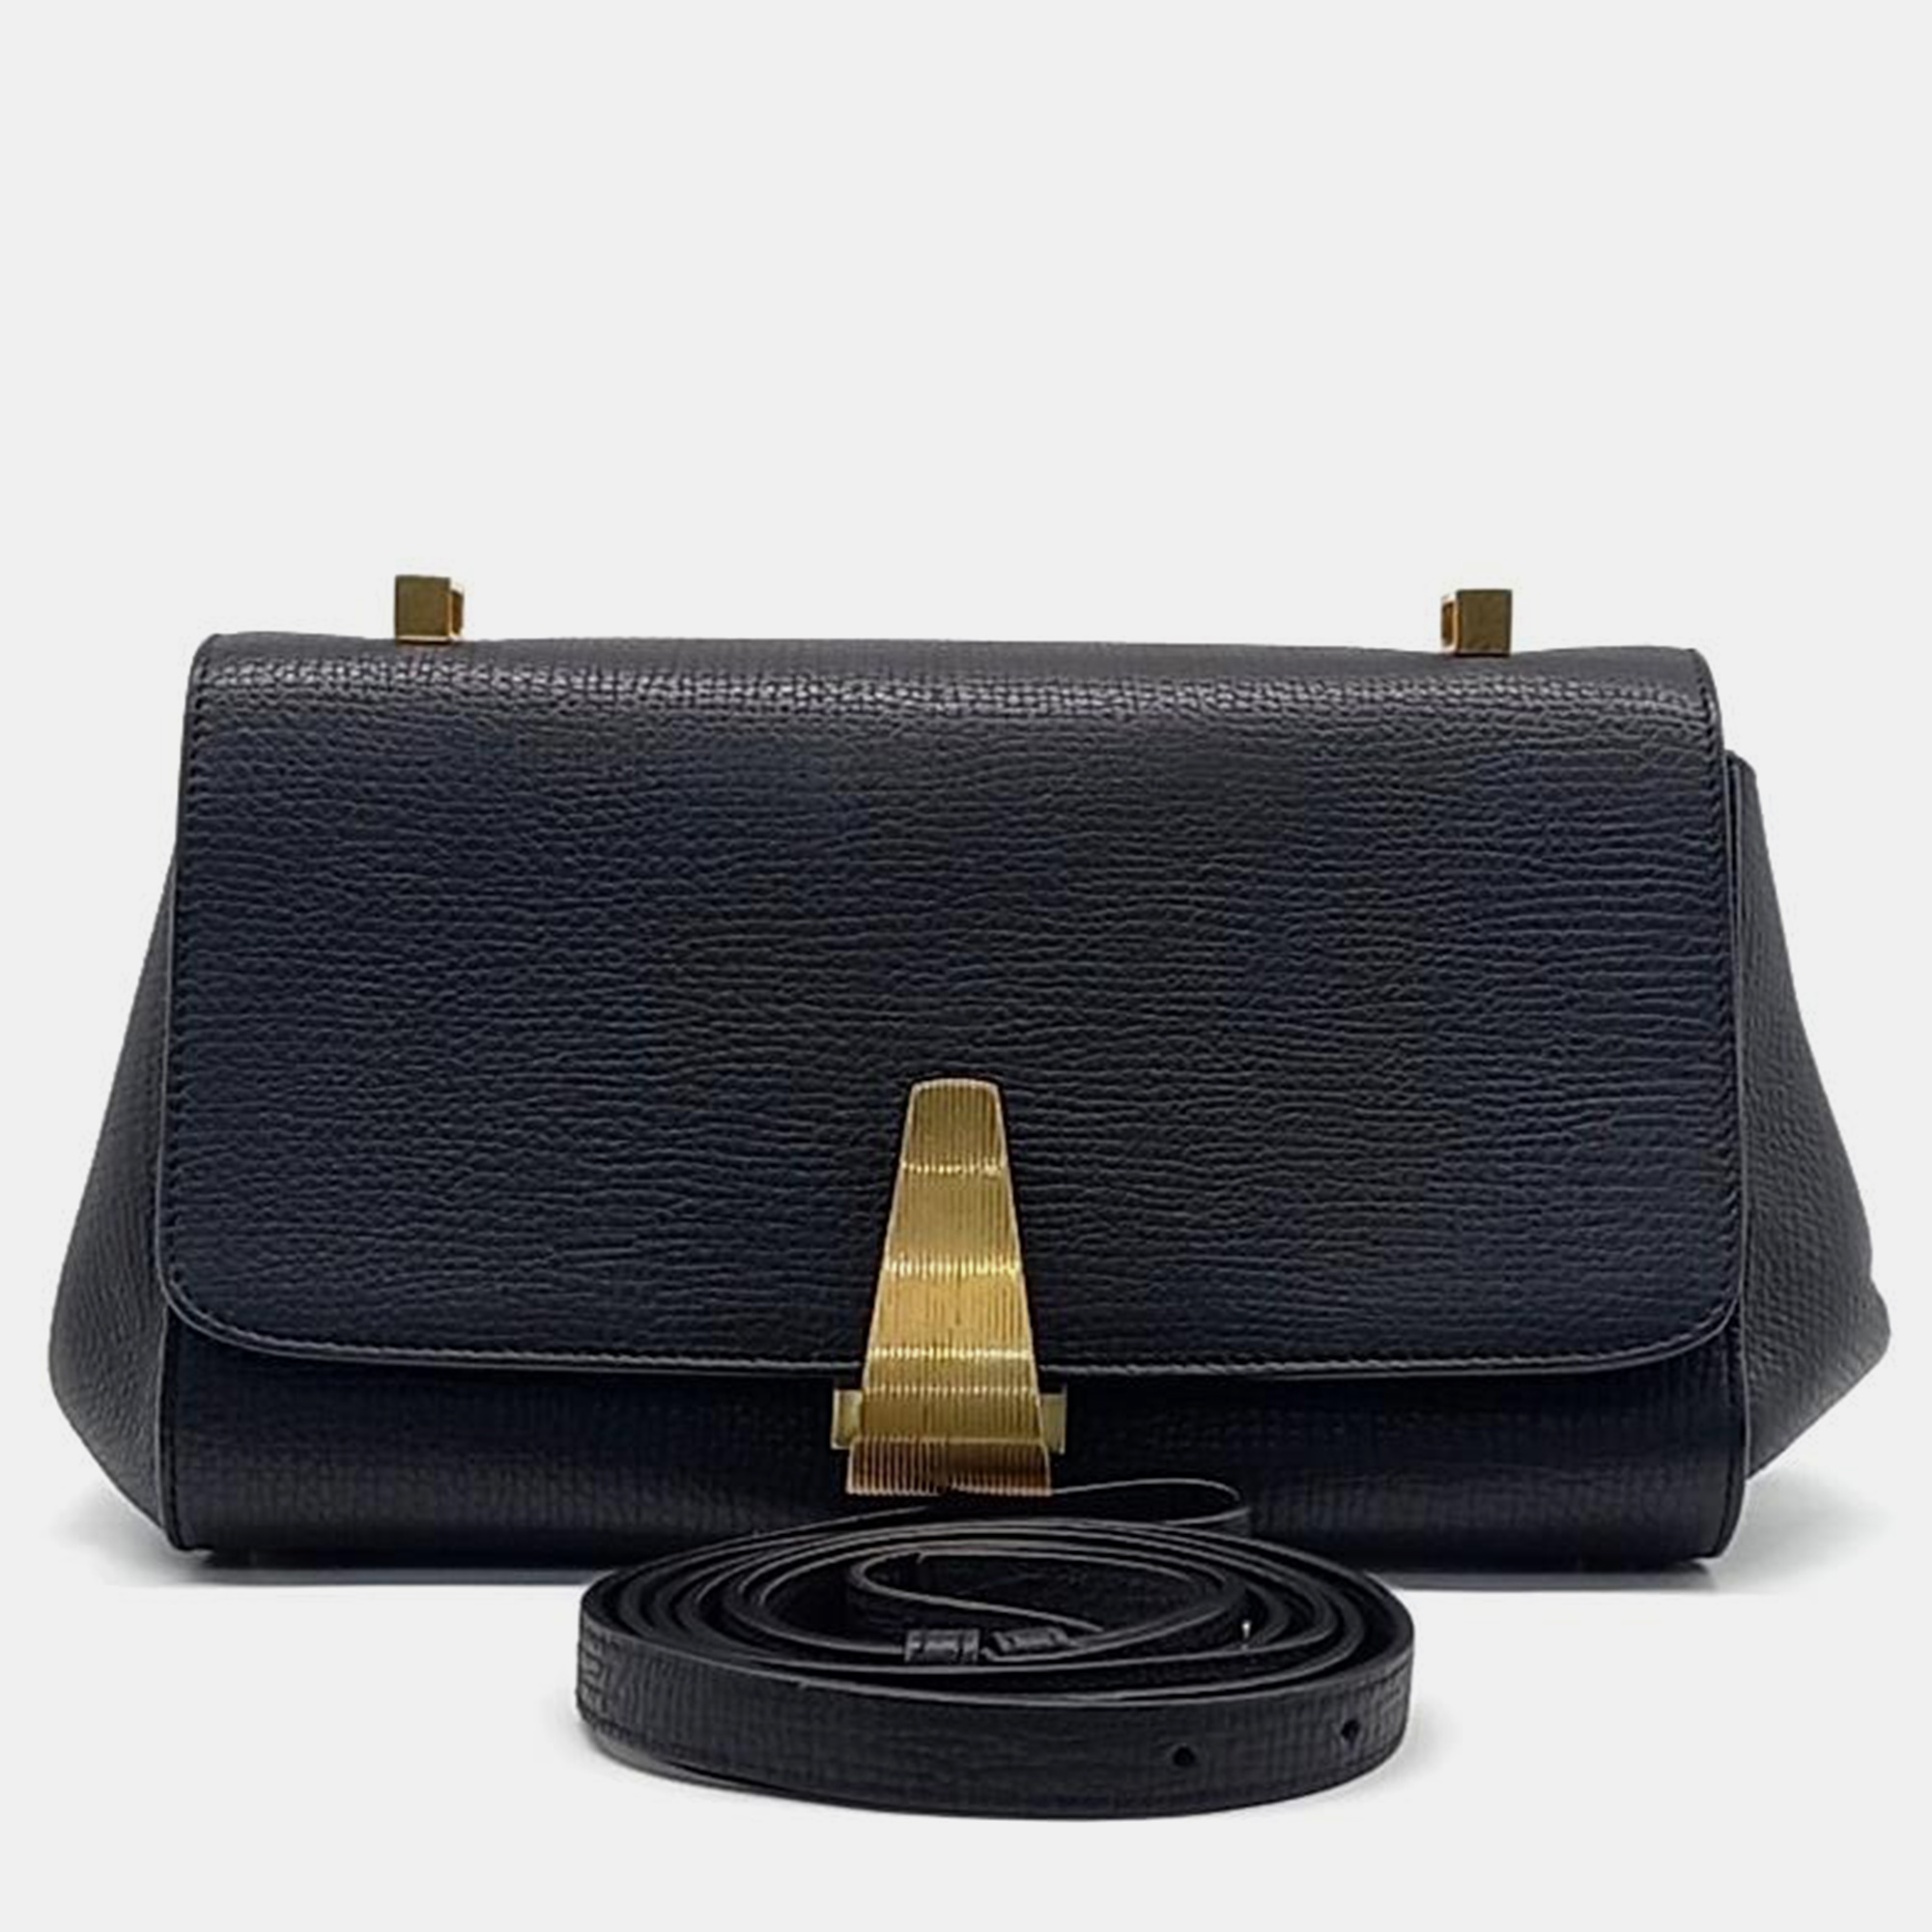 Bottega veneta black leather bv angle handbag